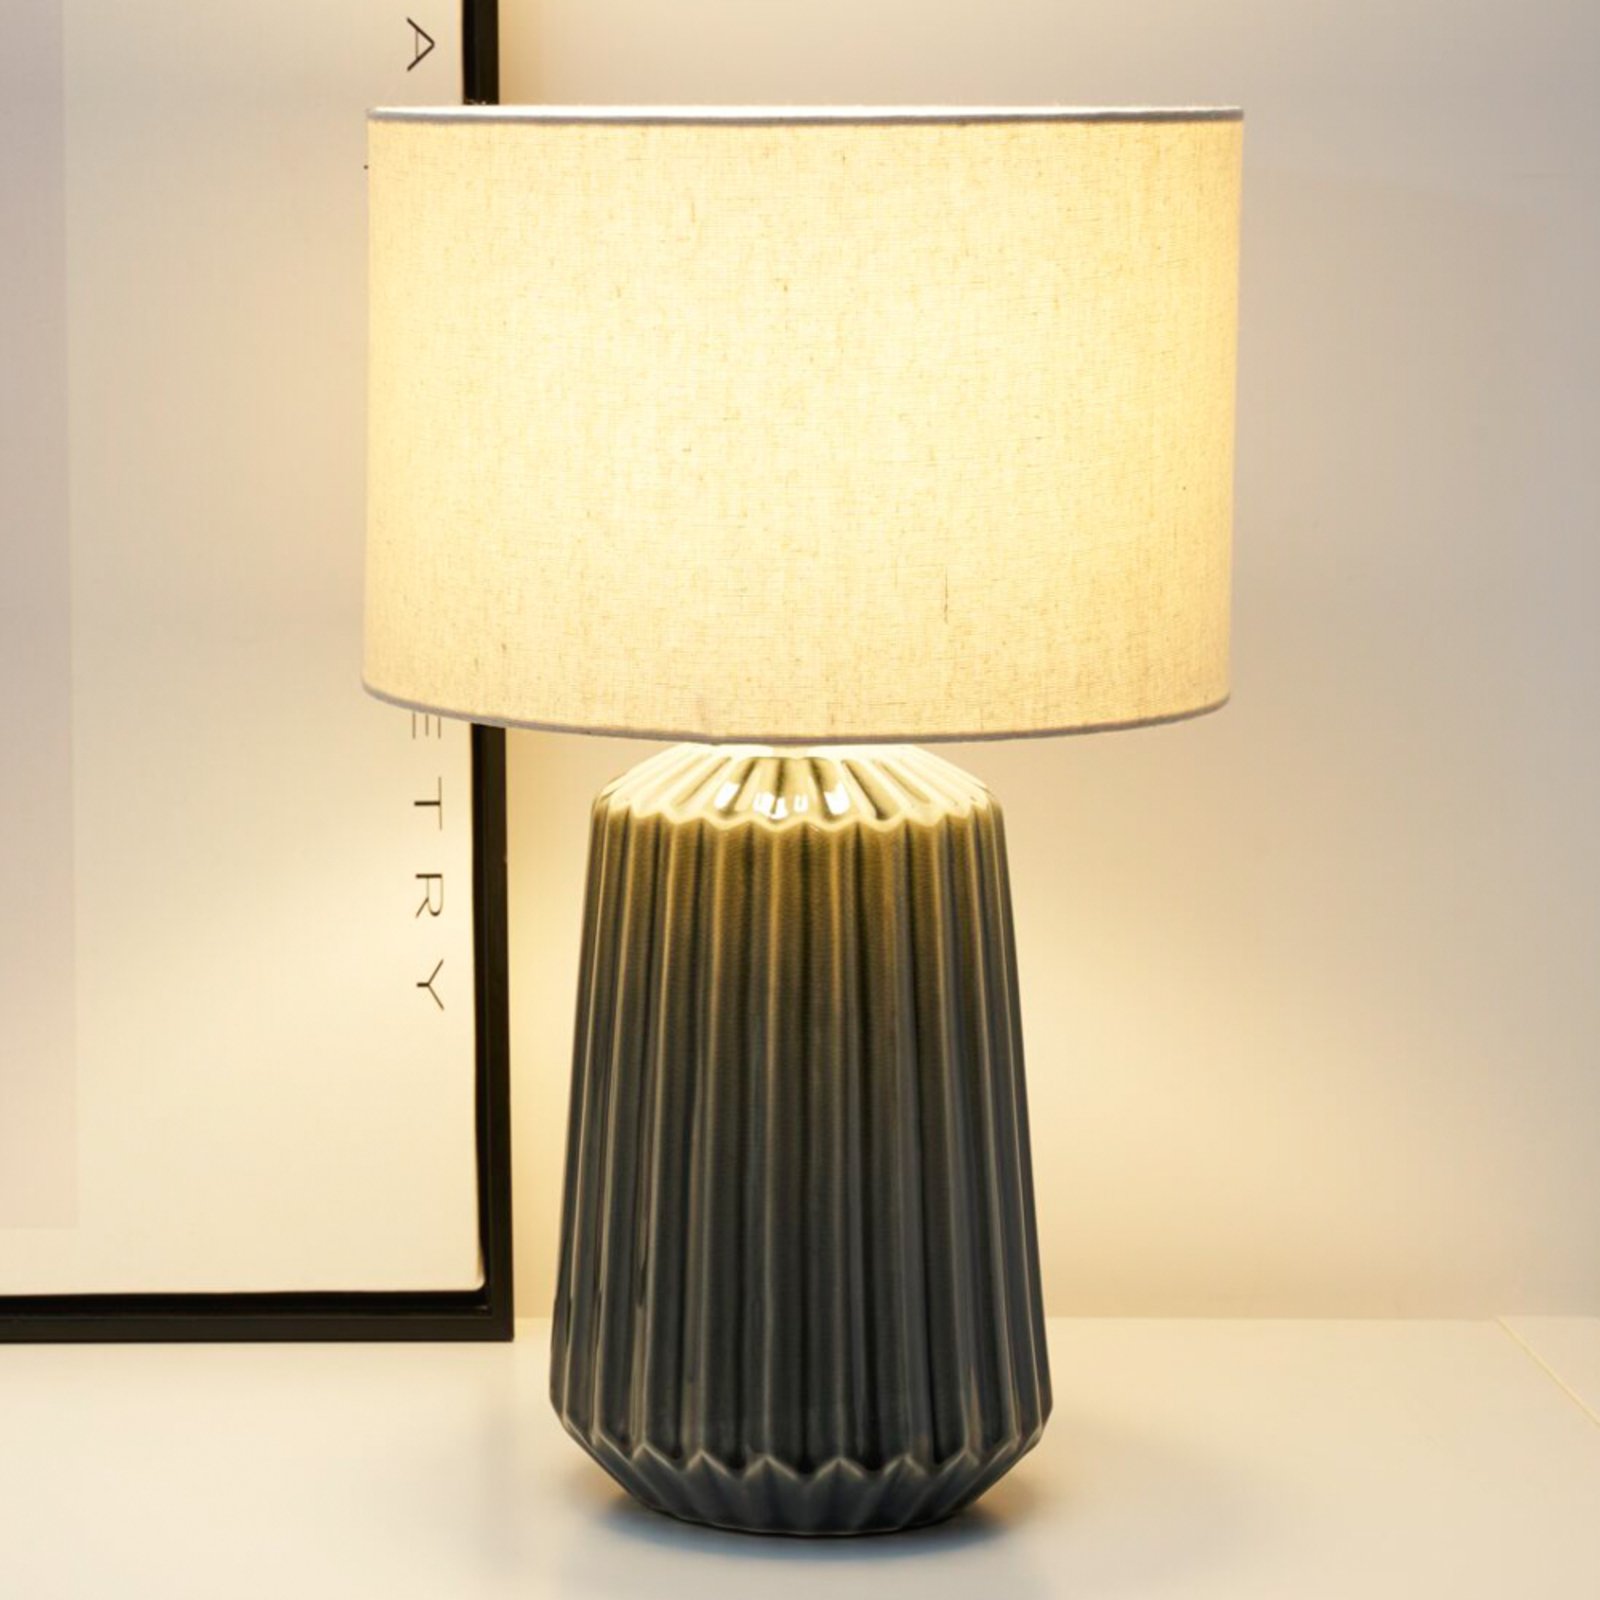 Pauleen Classy Delight table lamp, ceramic base